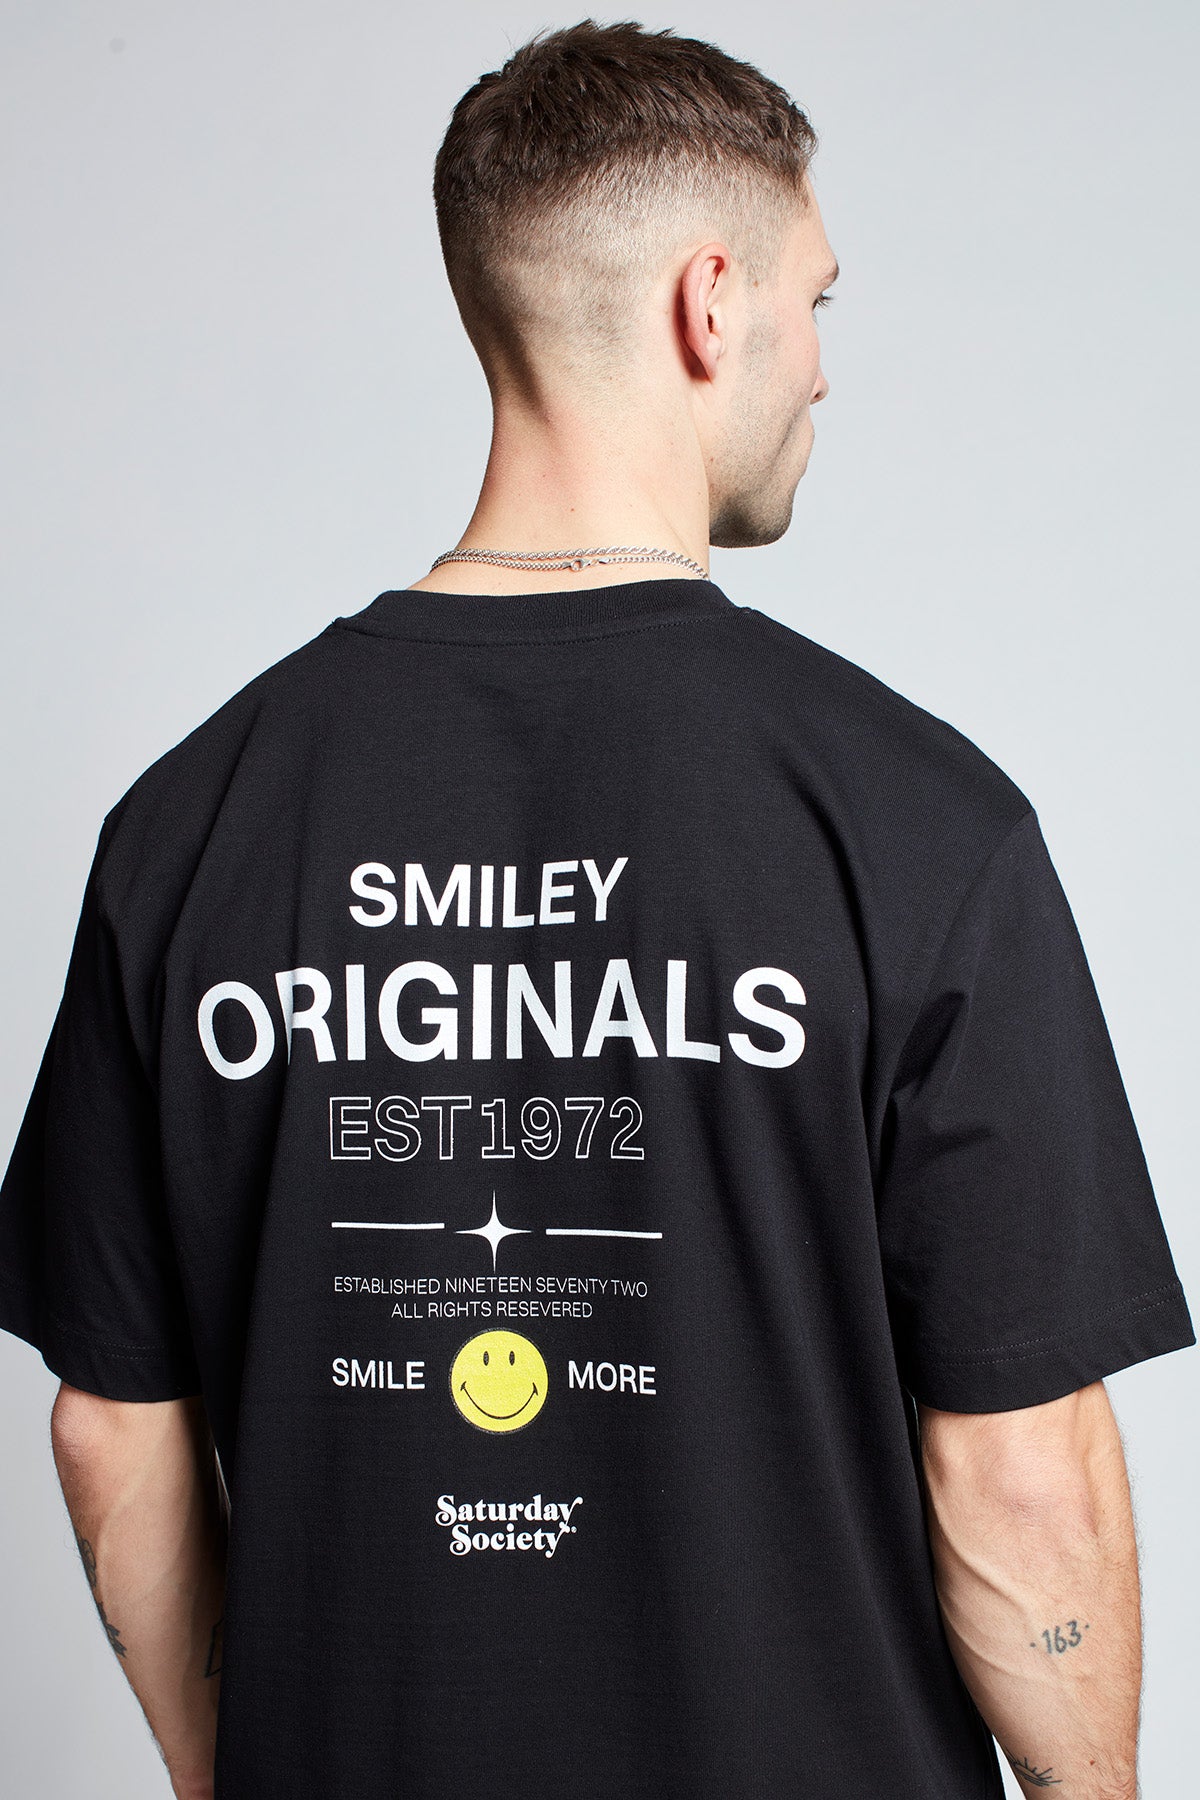 Smiley Originals® Smile More T-shirt in Black